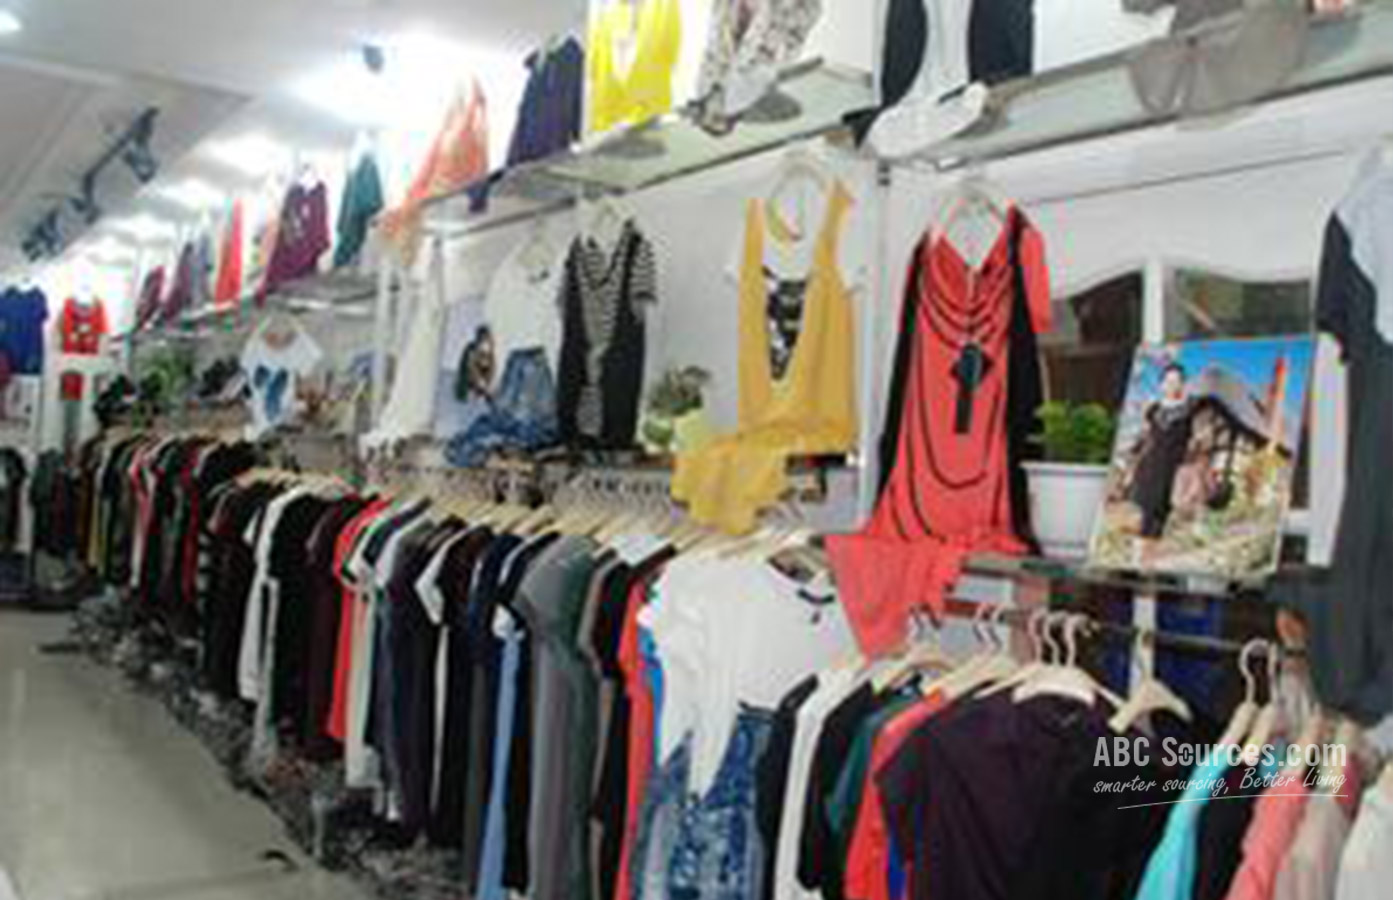 Guangzhou Shadong Youli Clothing Wholesale City - Abc Sources